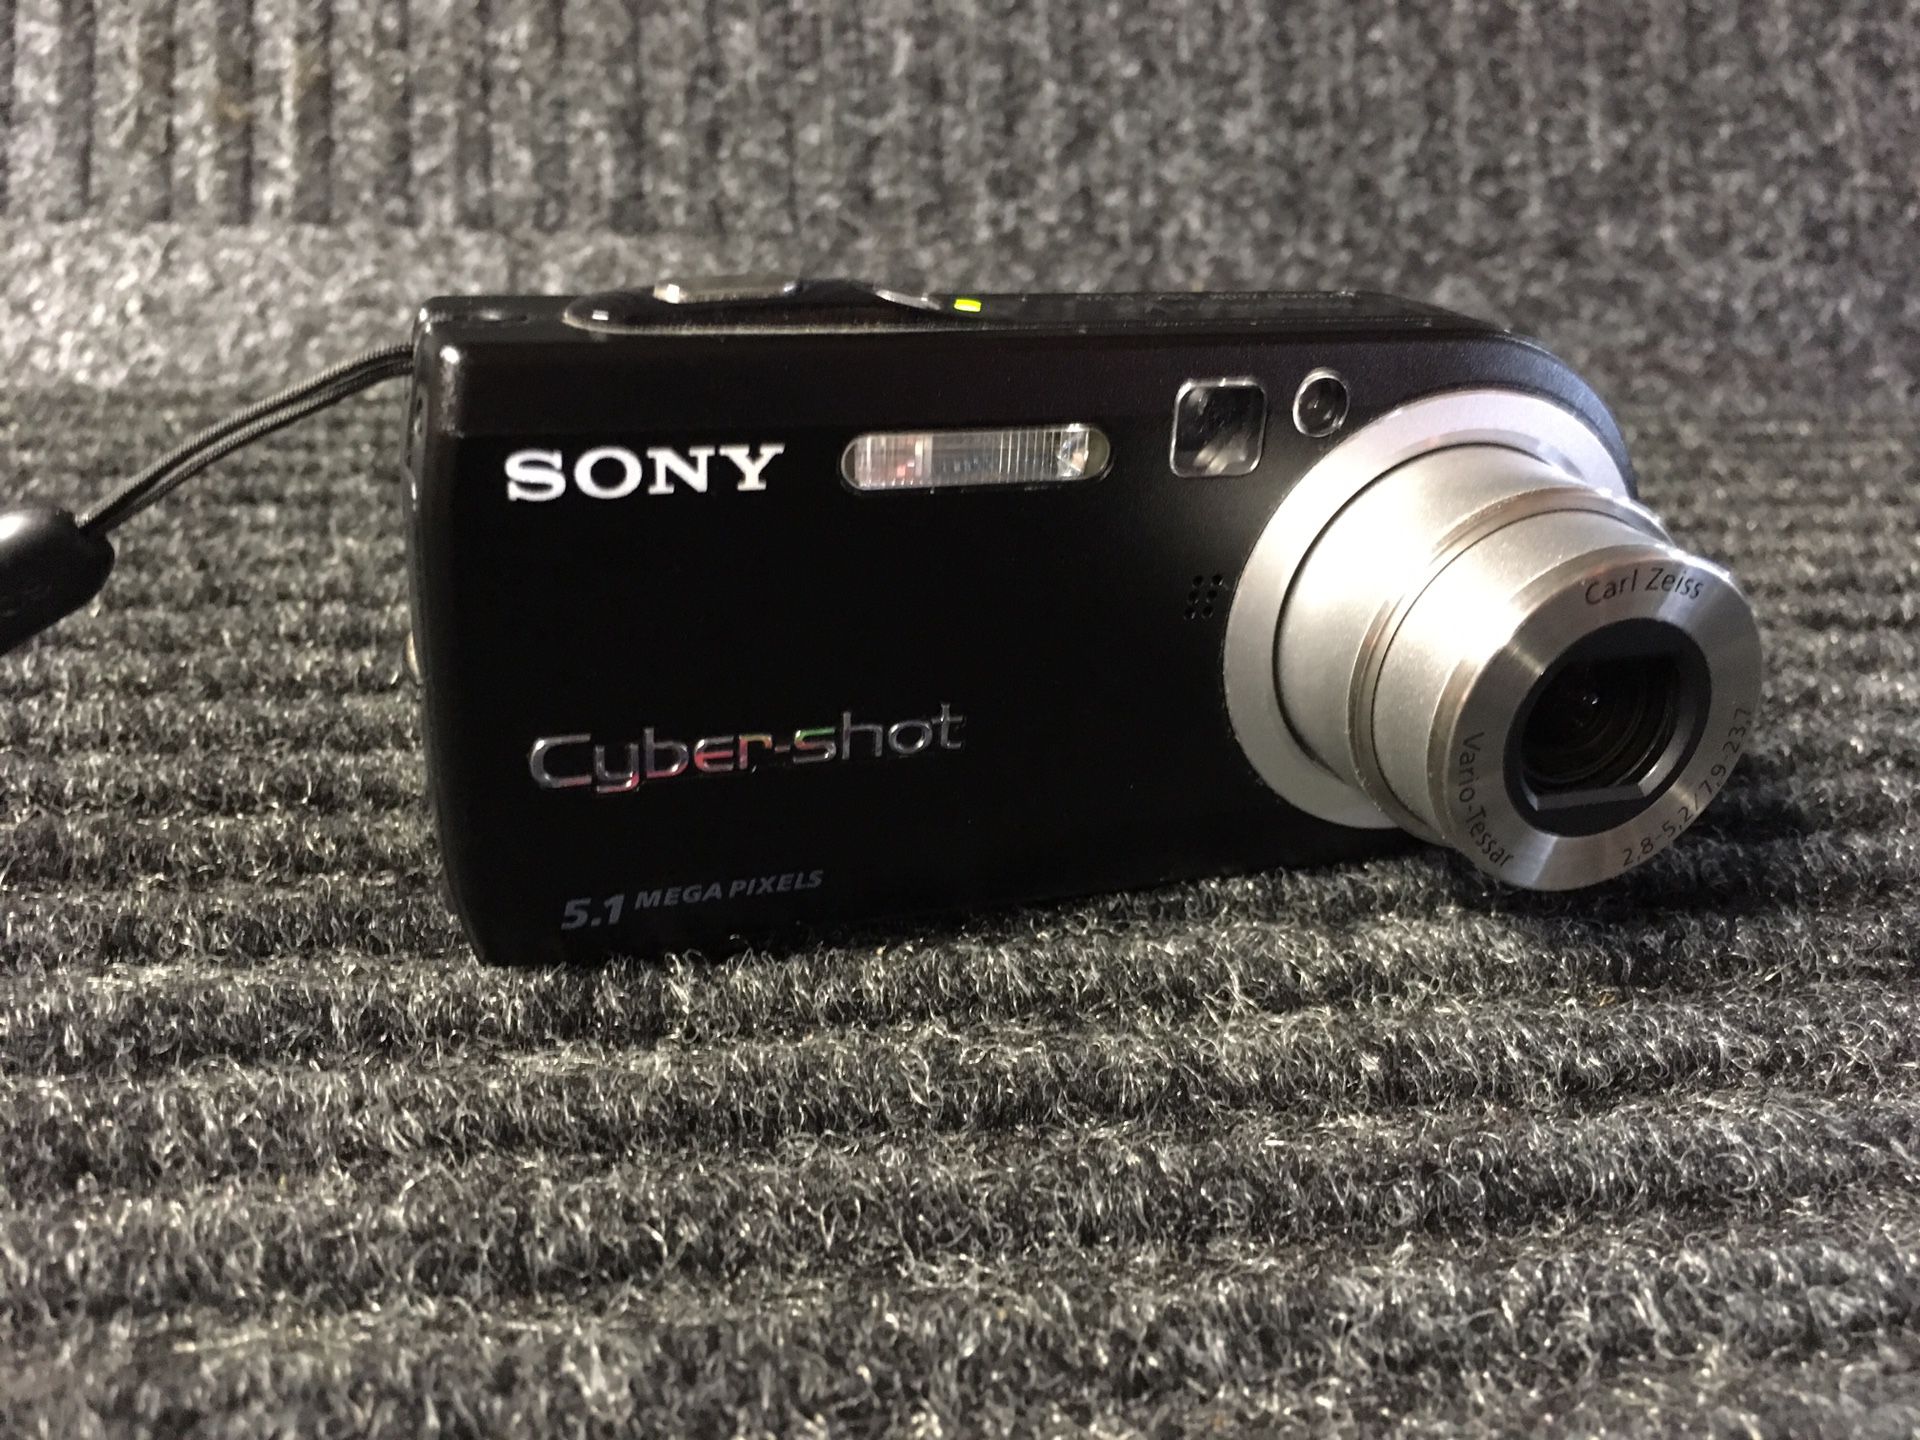 Sony Cyber-shot digital camera/movie camera